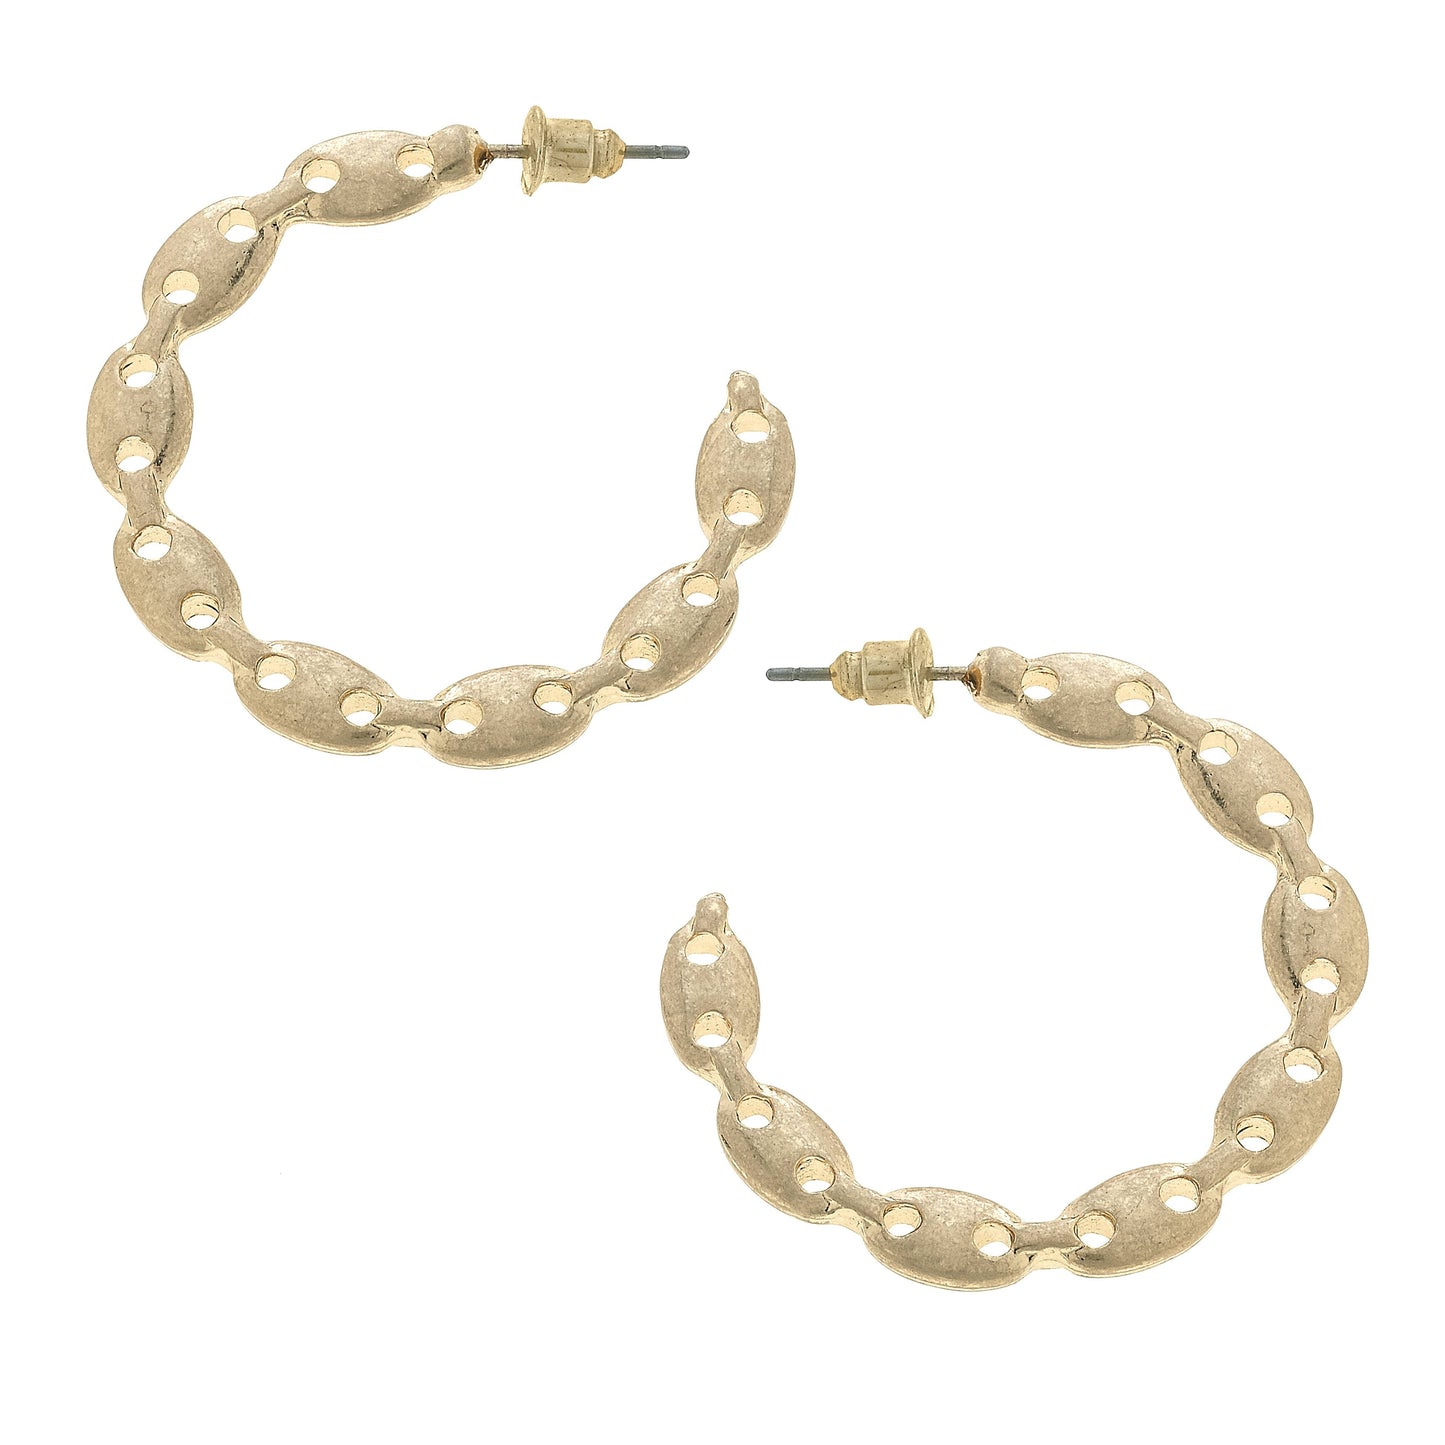 Vivian Frozen Chain Link Hoop Earrings in Worn Gold